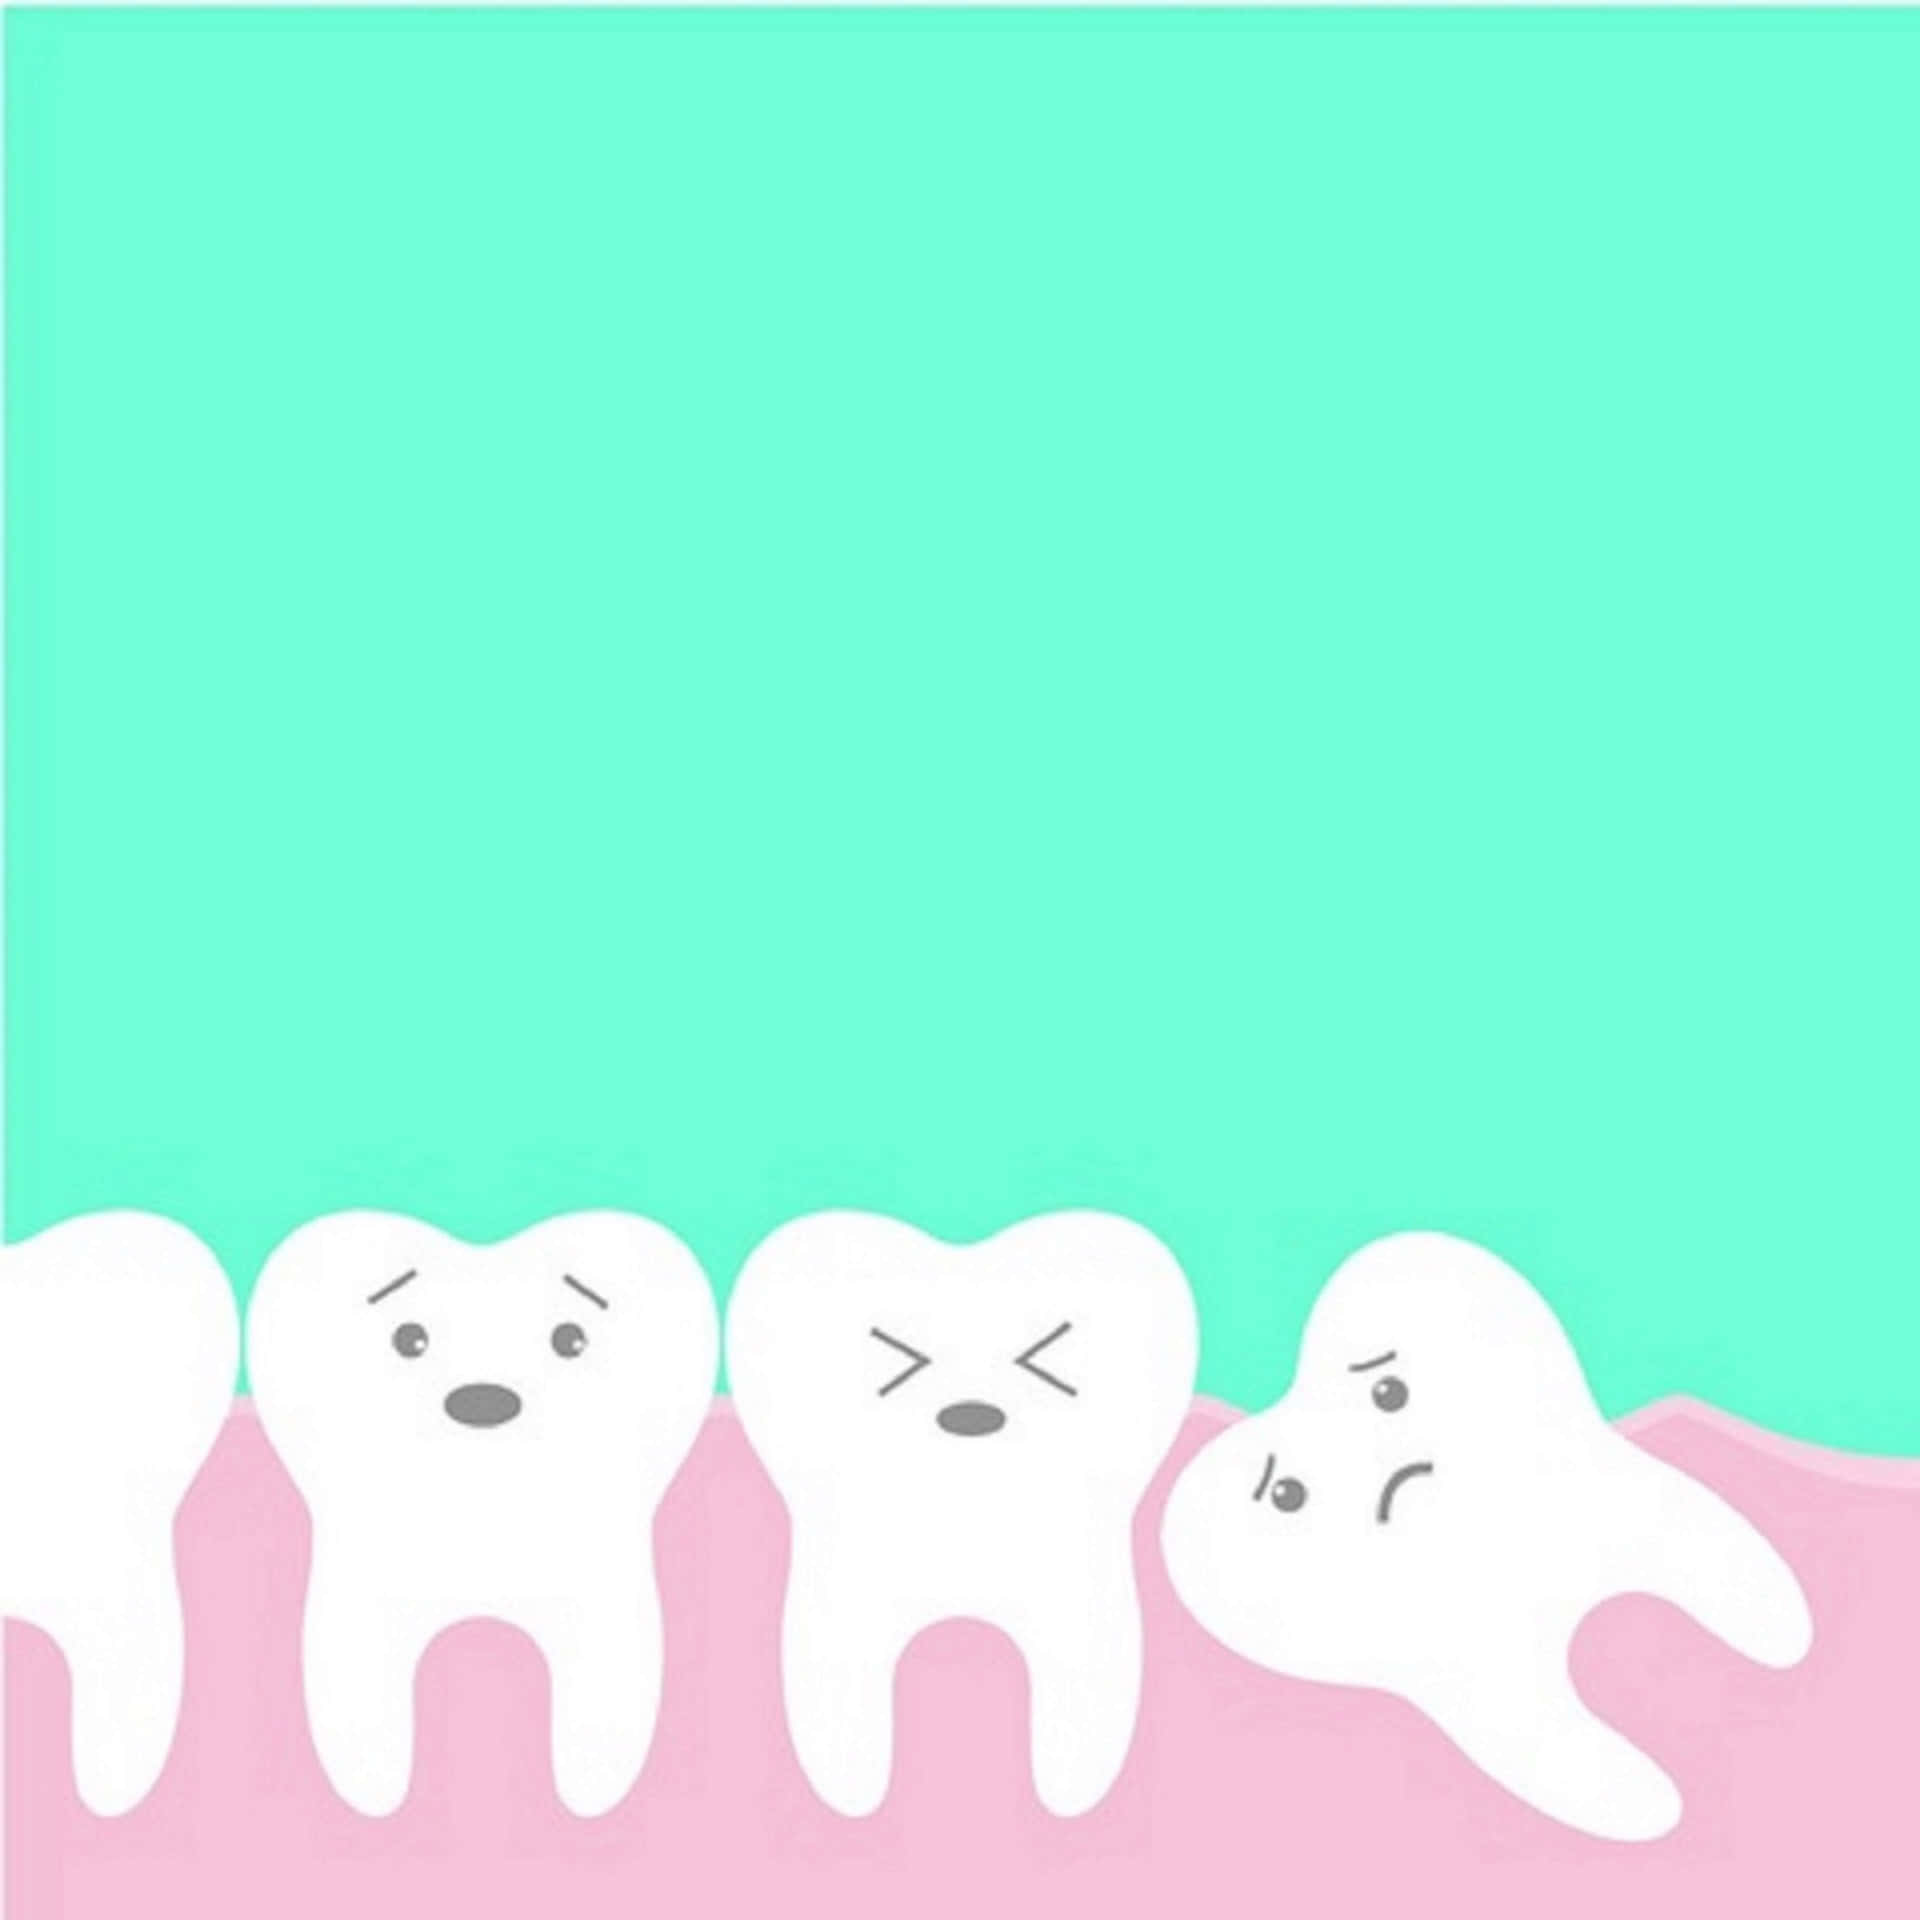 Dental Wallpaper Images - Free Download on Freepik